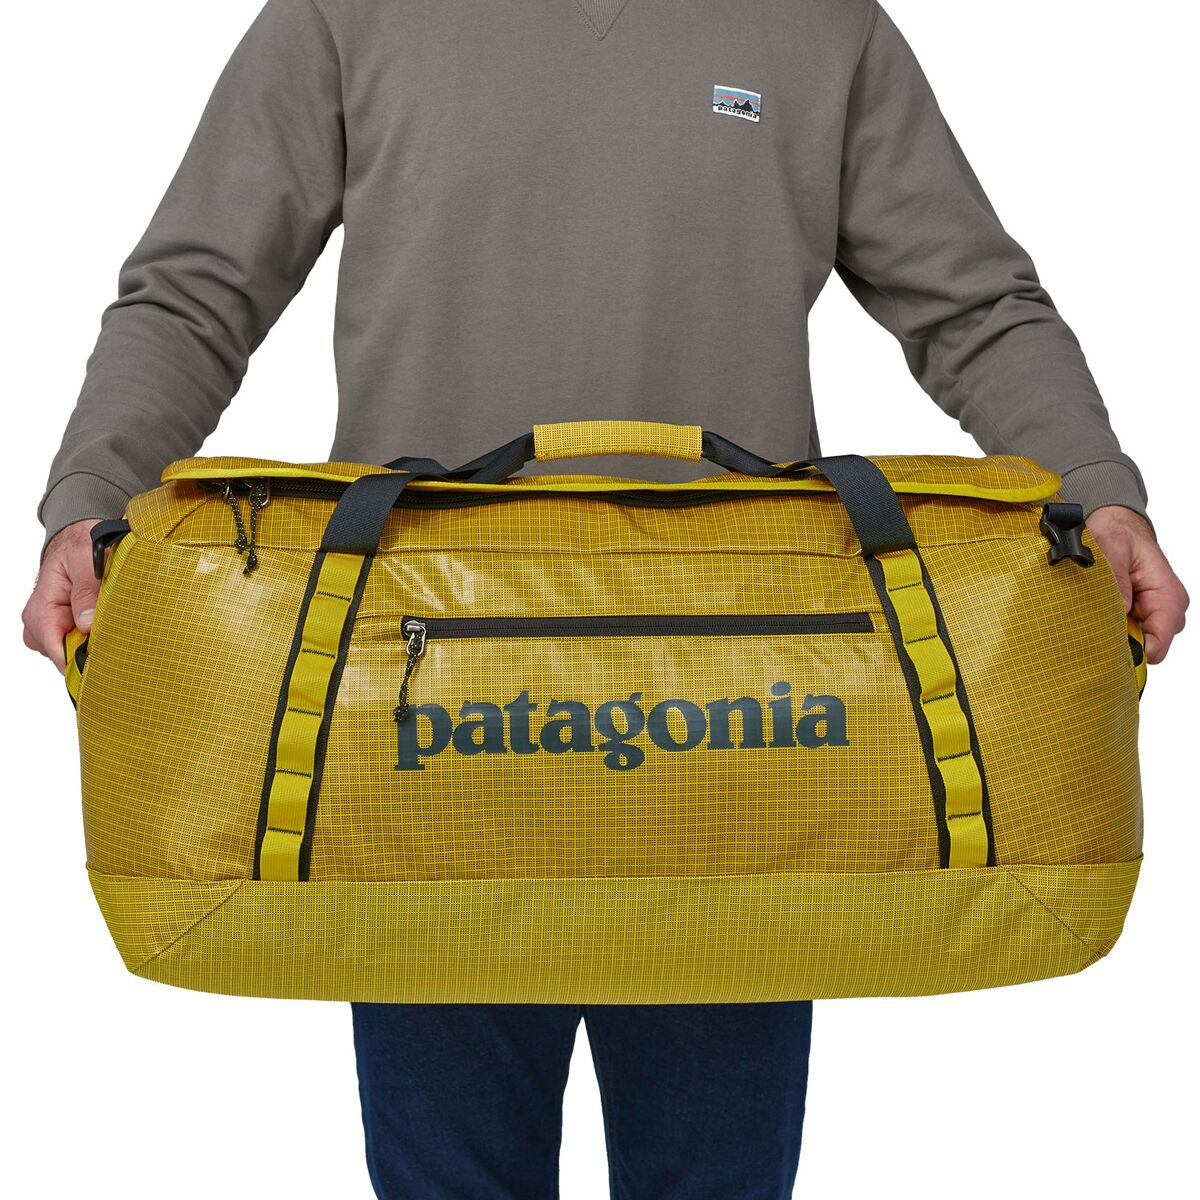 Patagonia Black Hole 70L Duffel Bag - Accessories